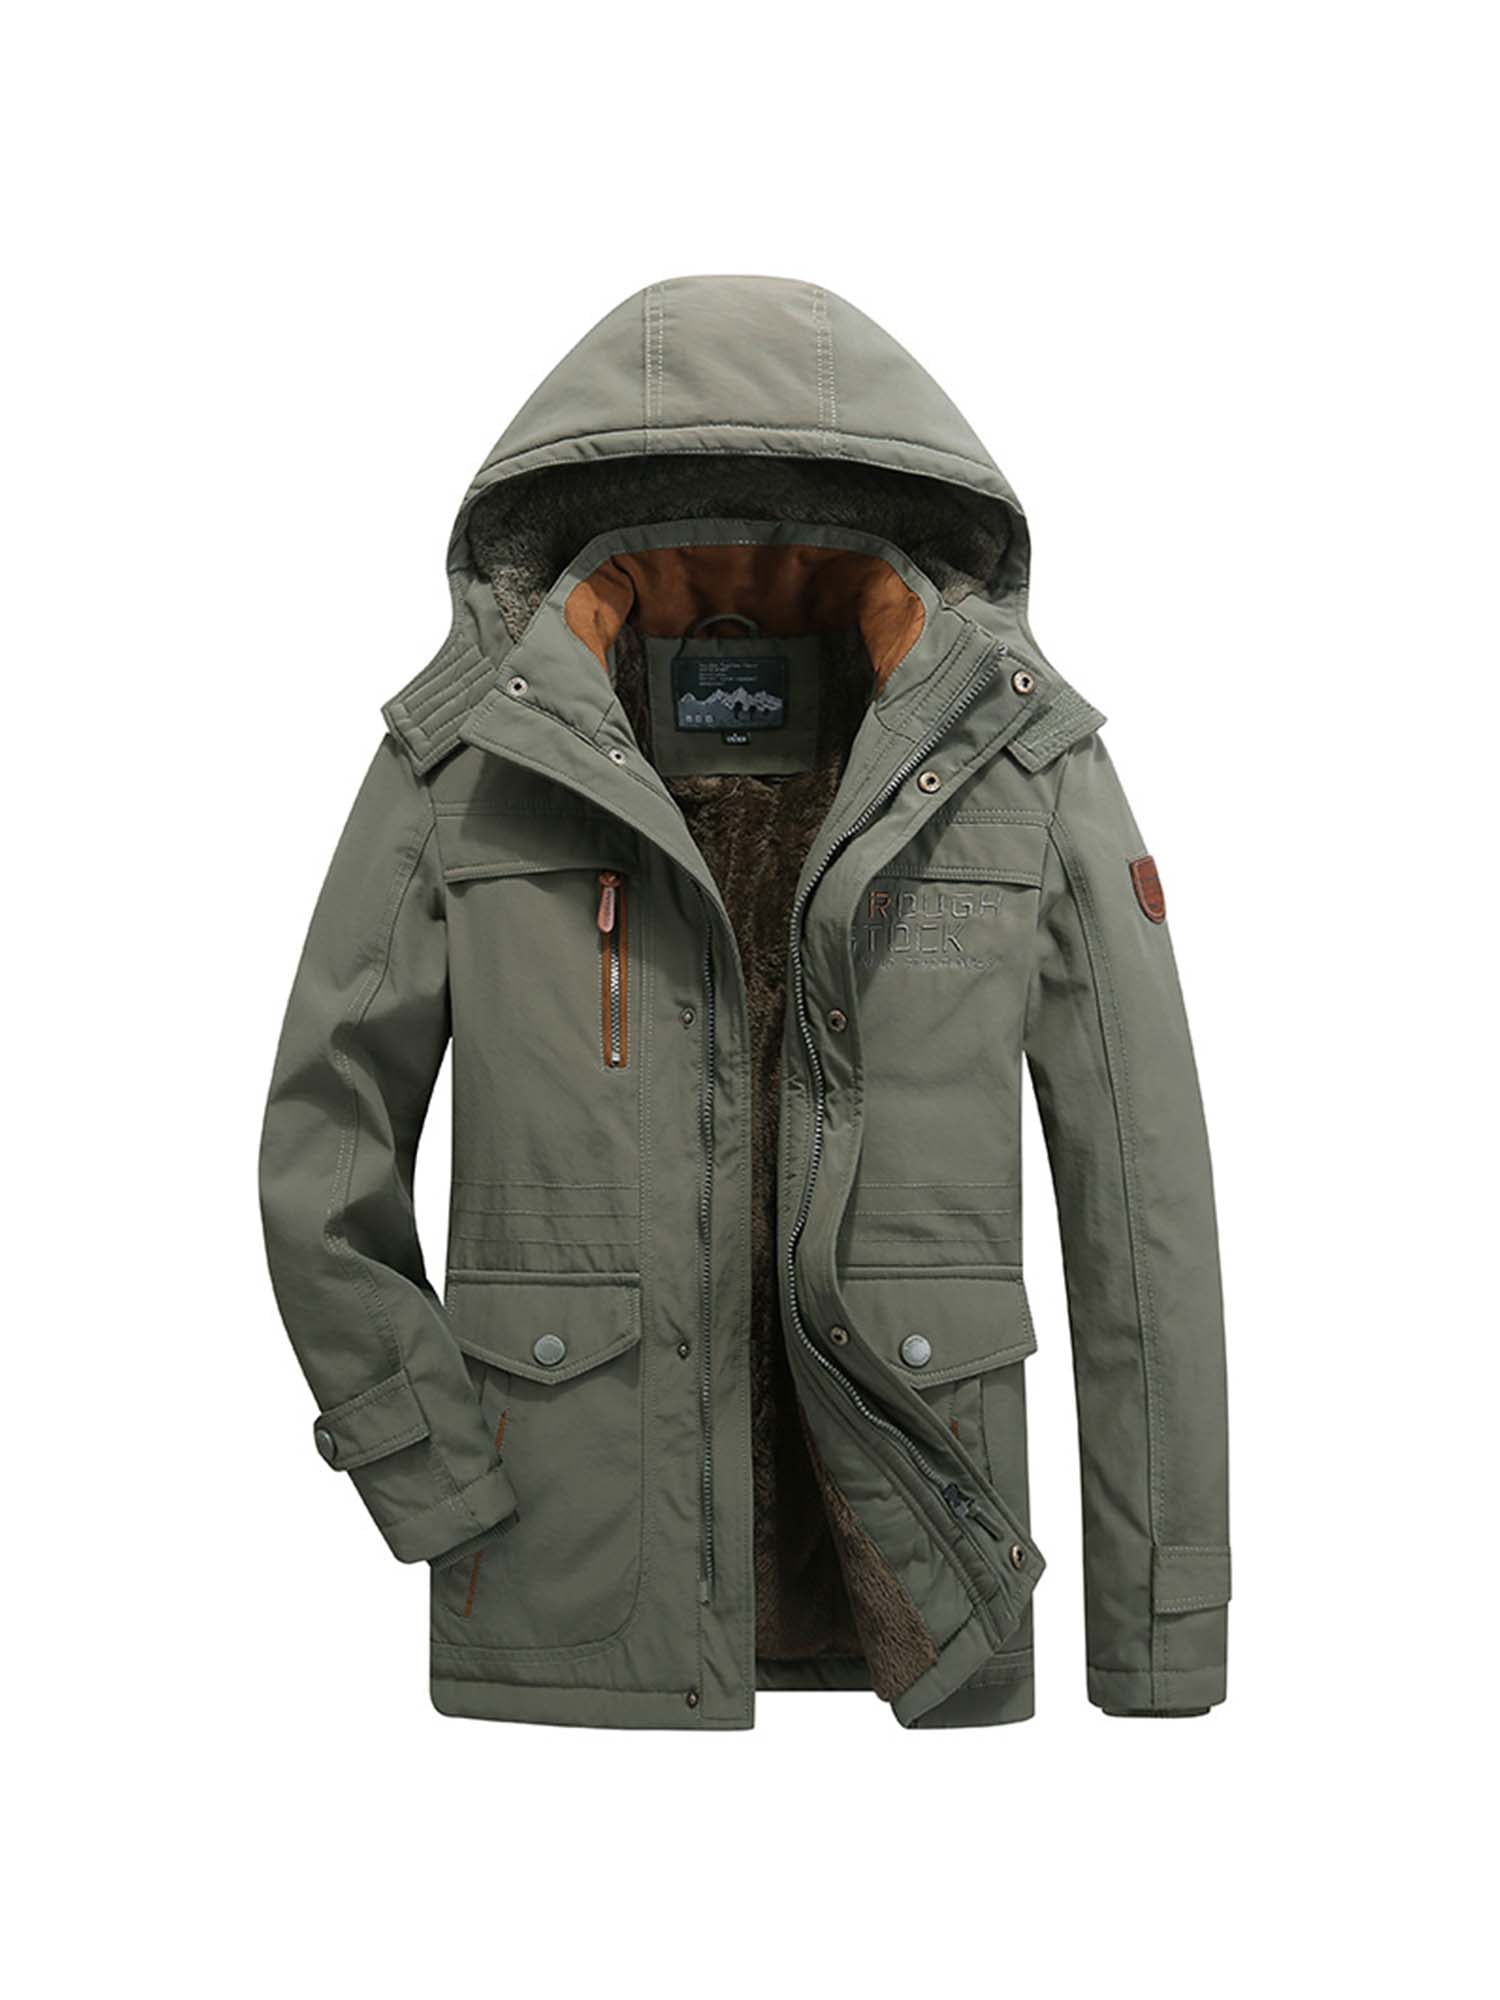 DOWNJAKE - Men's Winter Warm Faux Fur Lined Coat With Detachable Hood ...